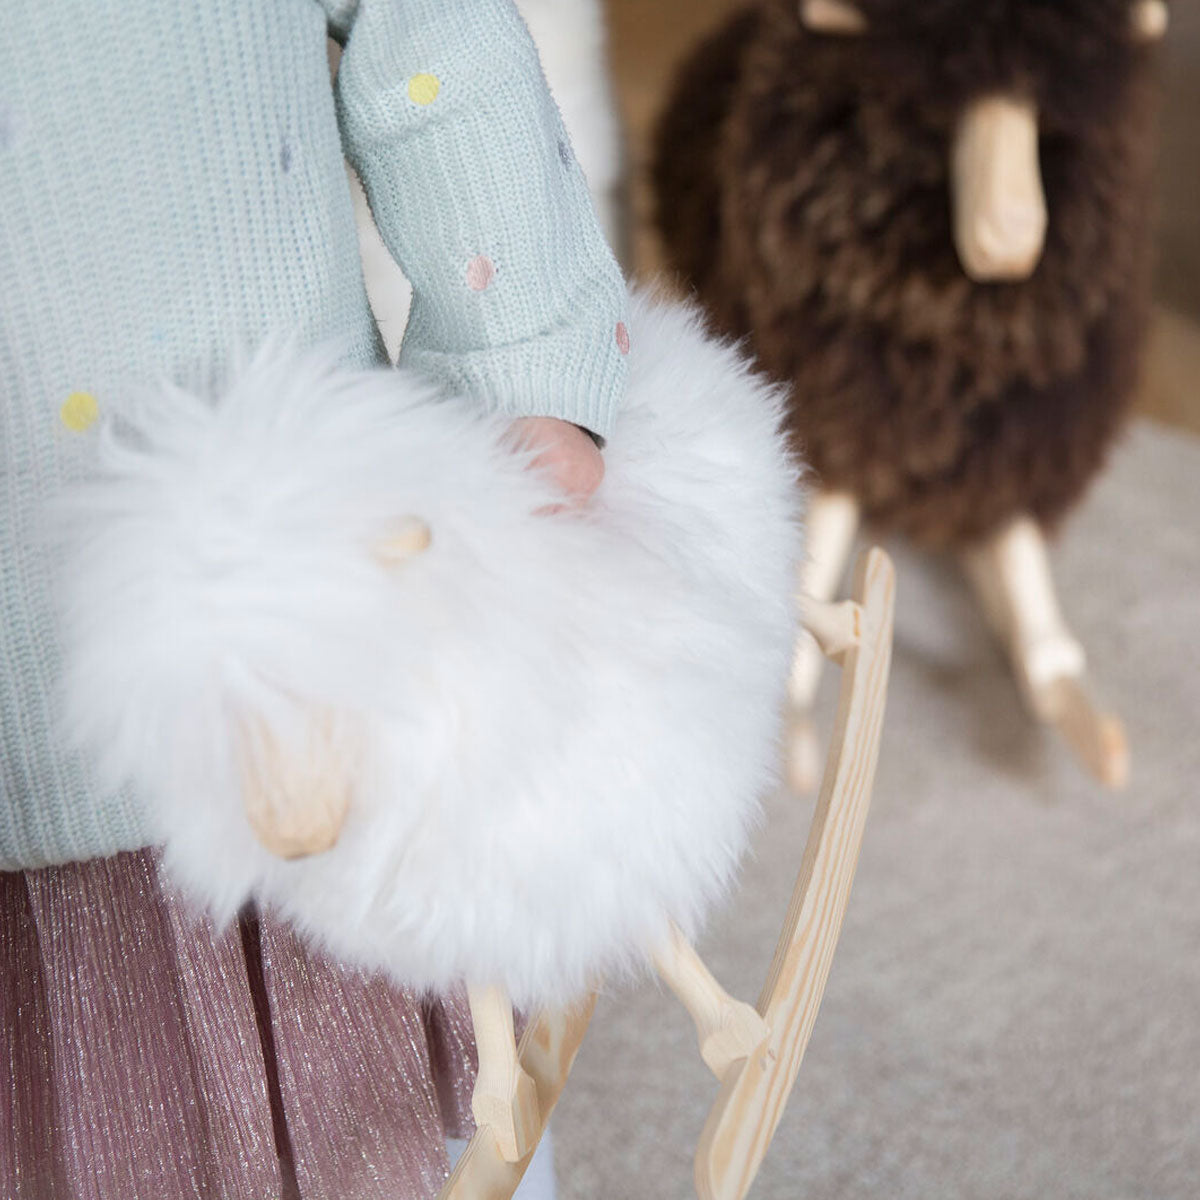 The Rocking Lamb │ Povl Kjer Design │ Made in Denmark │ Natural Grey Long Wool │ Small